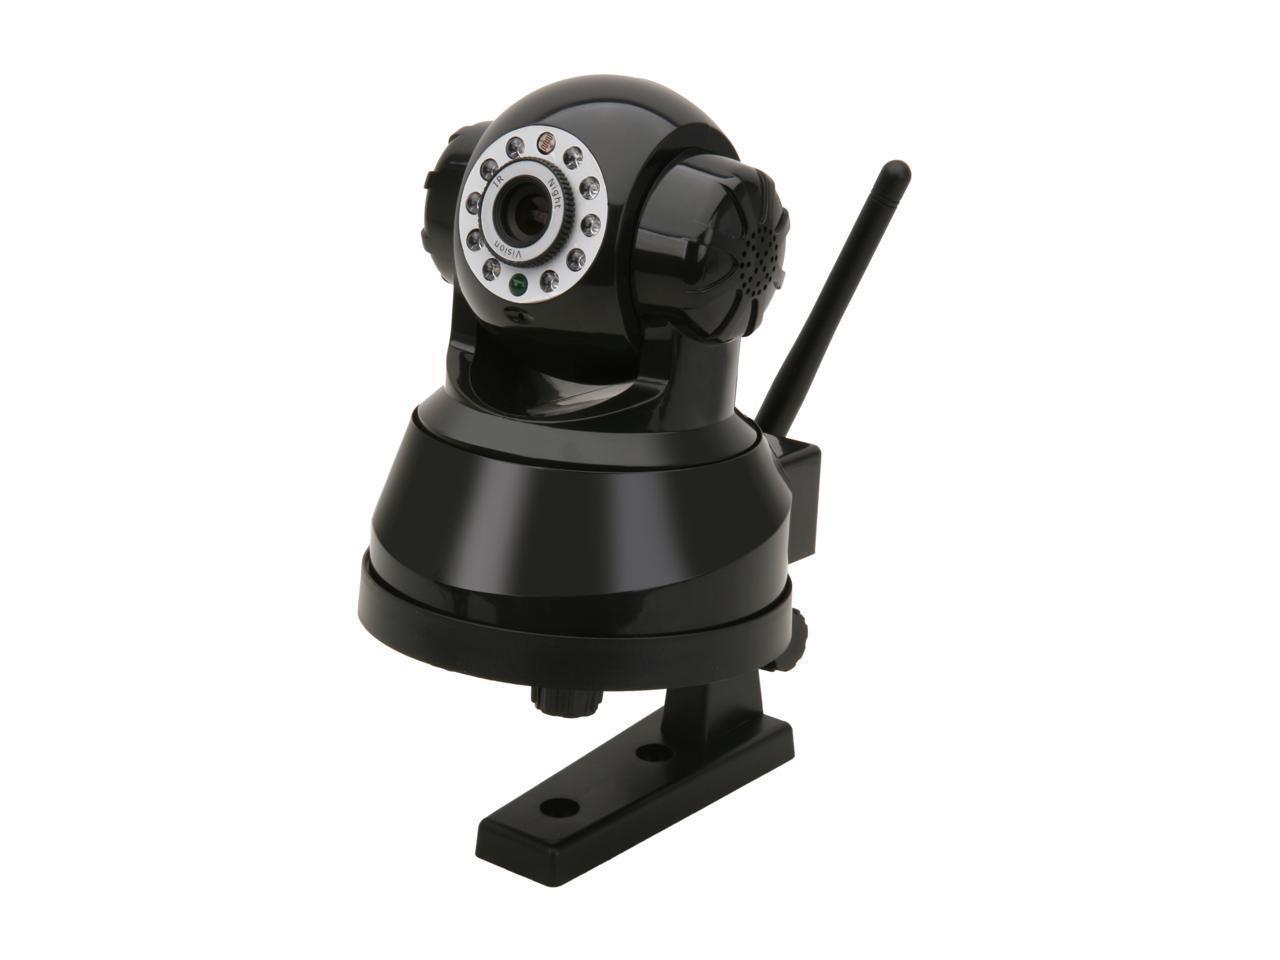 VONNIC - C907IP - 640 x 480 MAX Resolution RJ45 Wireless IP Network Camera - $79.95